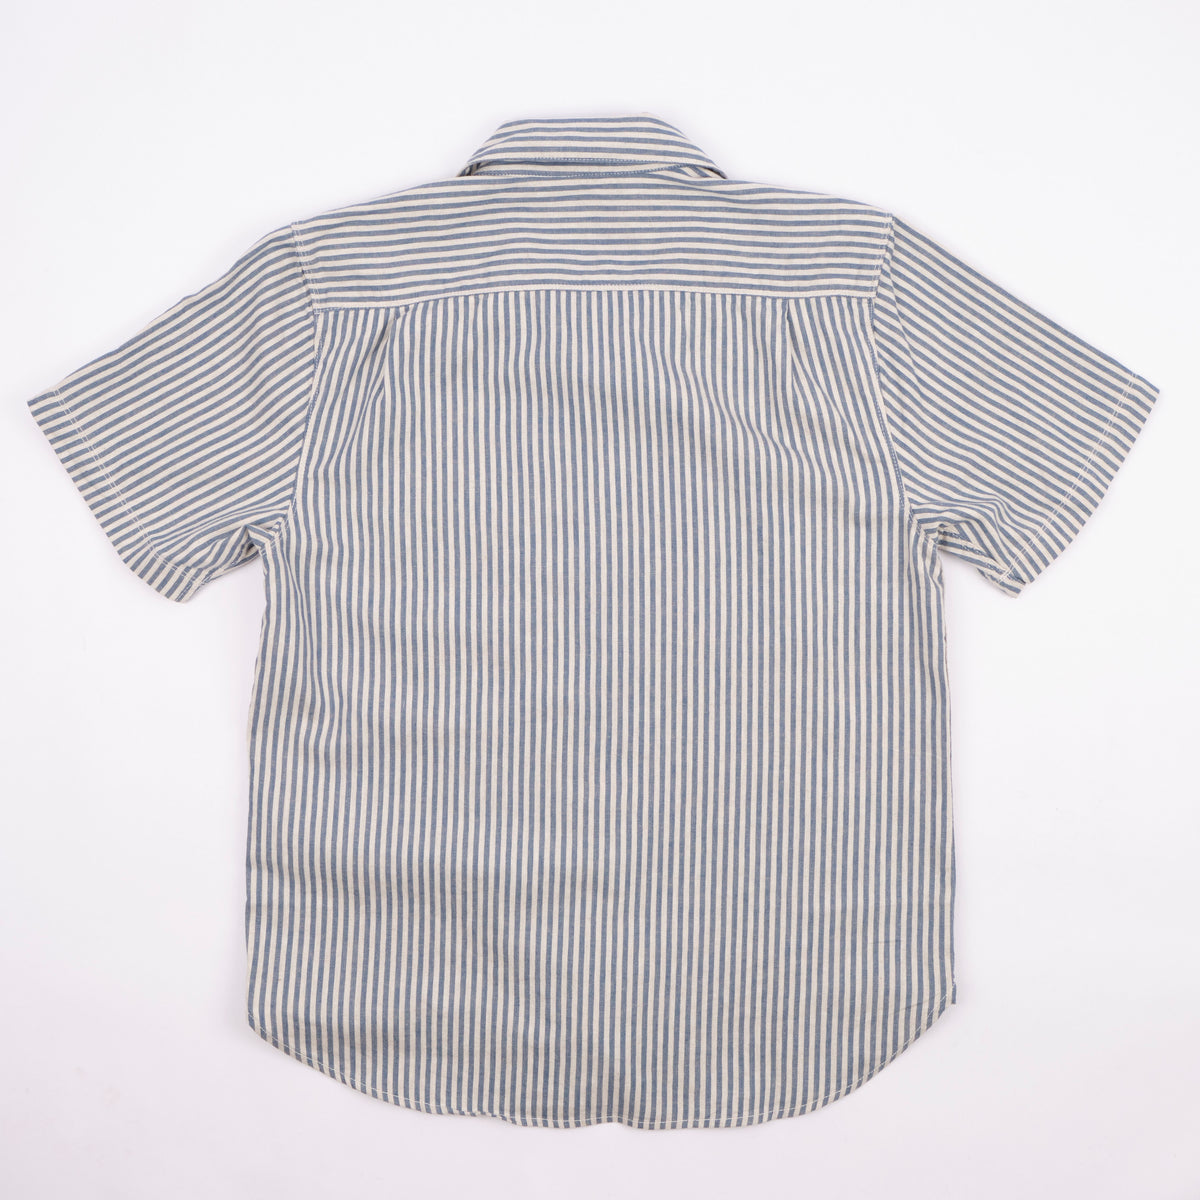 Freenote Cloth Dayton Shirt - Marine Stripe